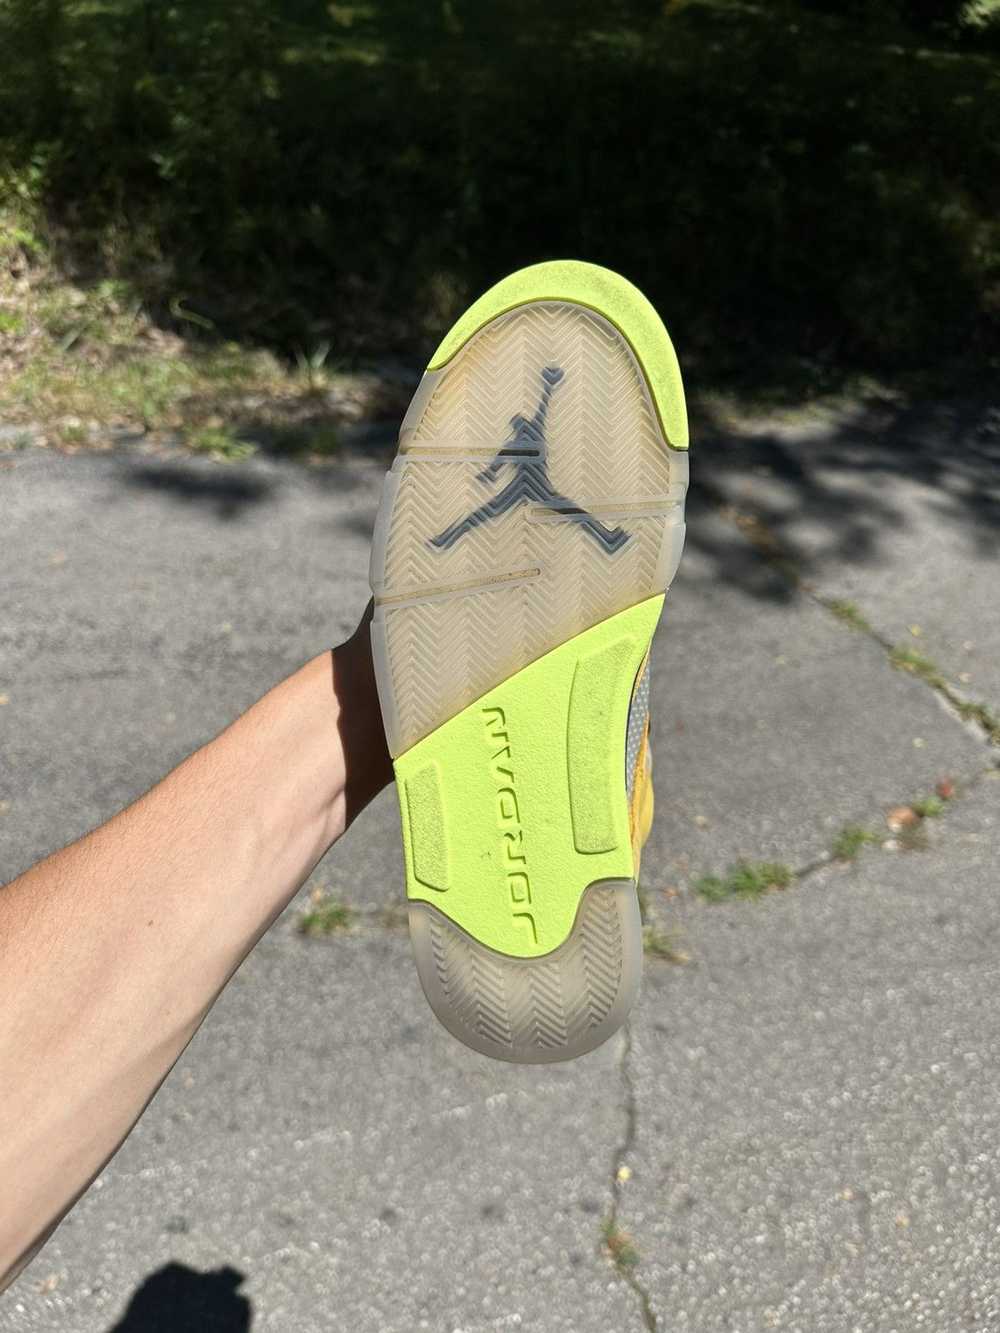 Jordan Brand × Nike Jordan 5 Worn once - image 3